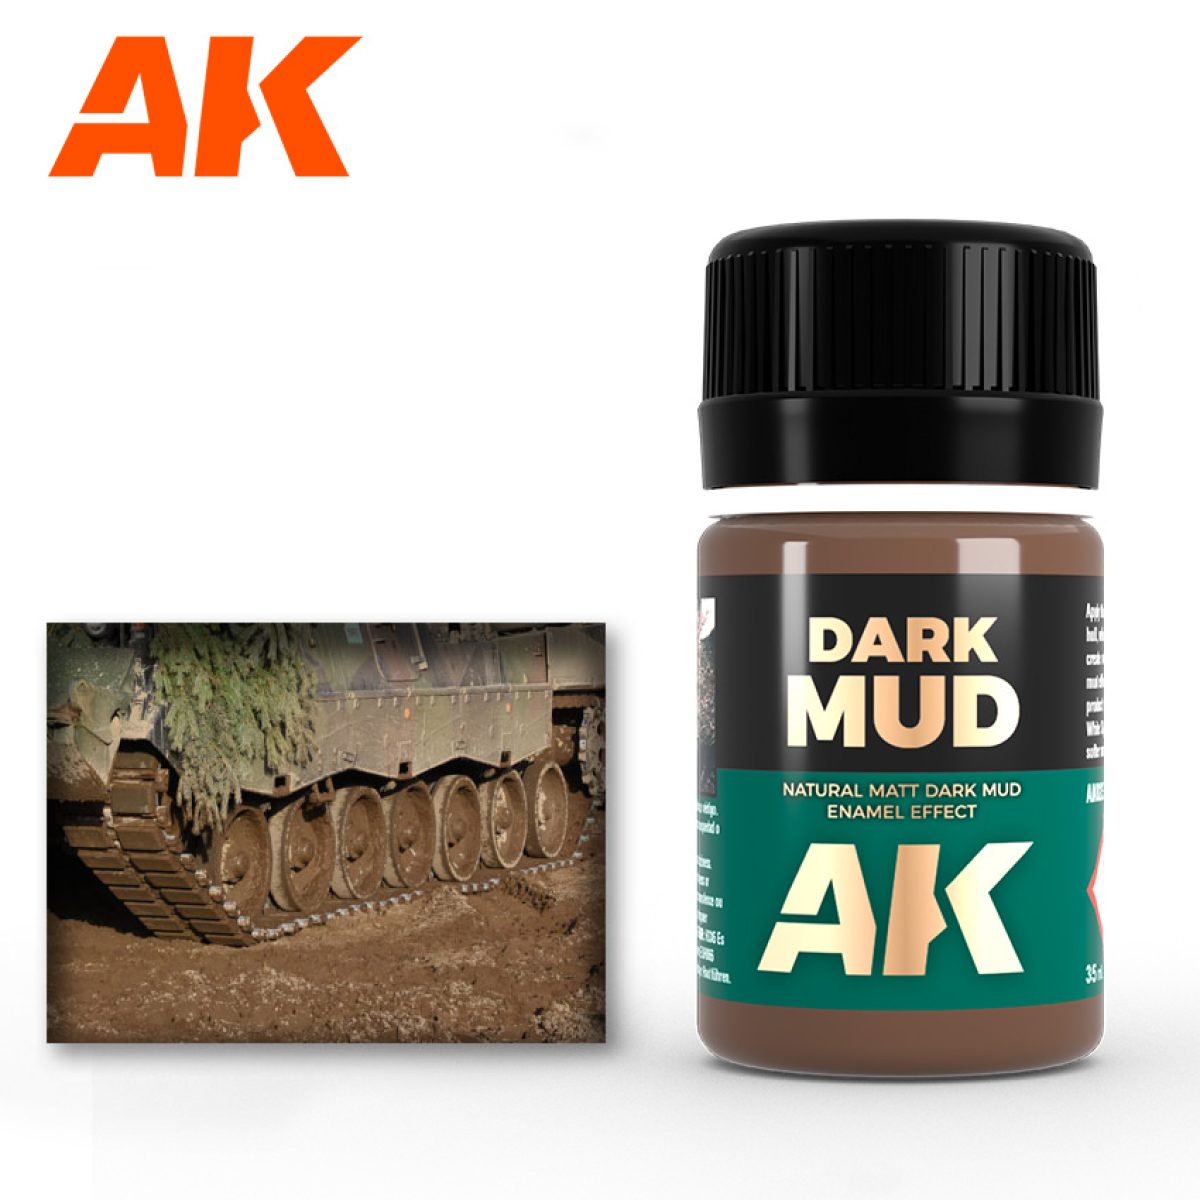 Buy Dark Mud Effect online for 3,75€